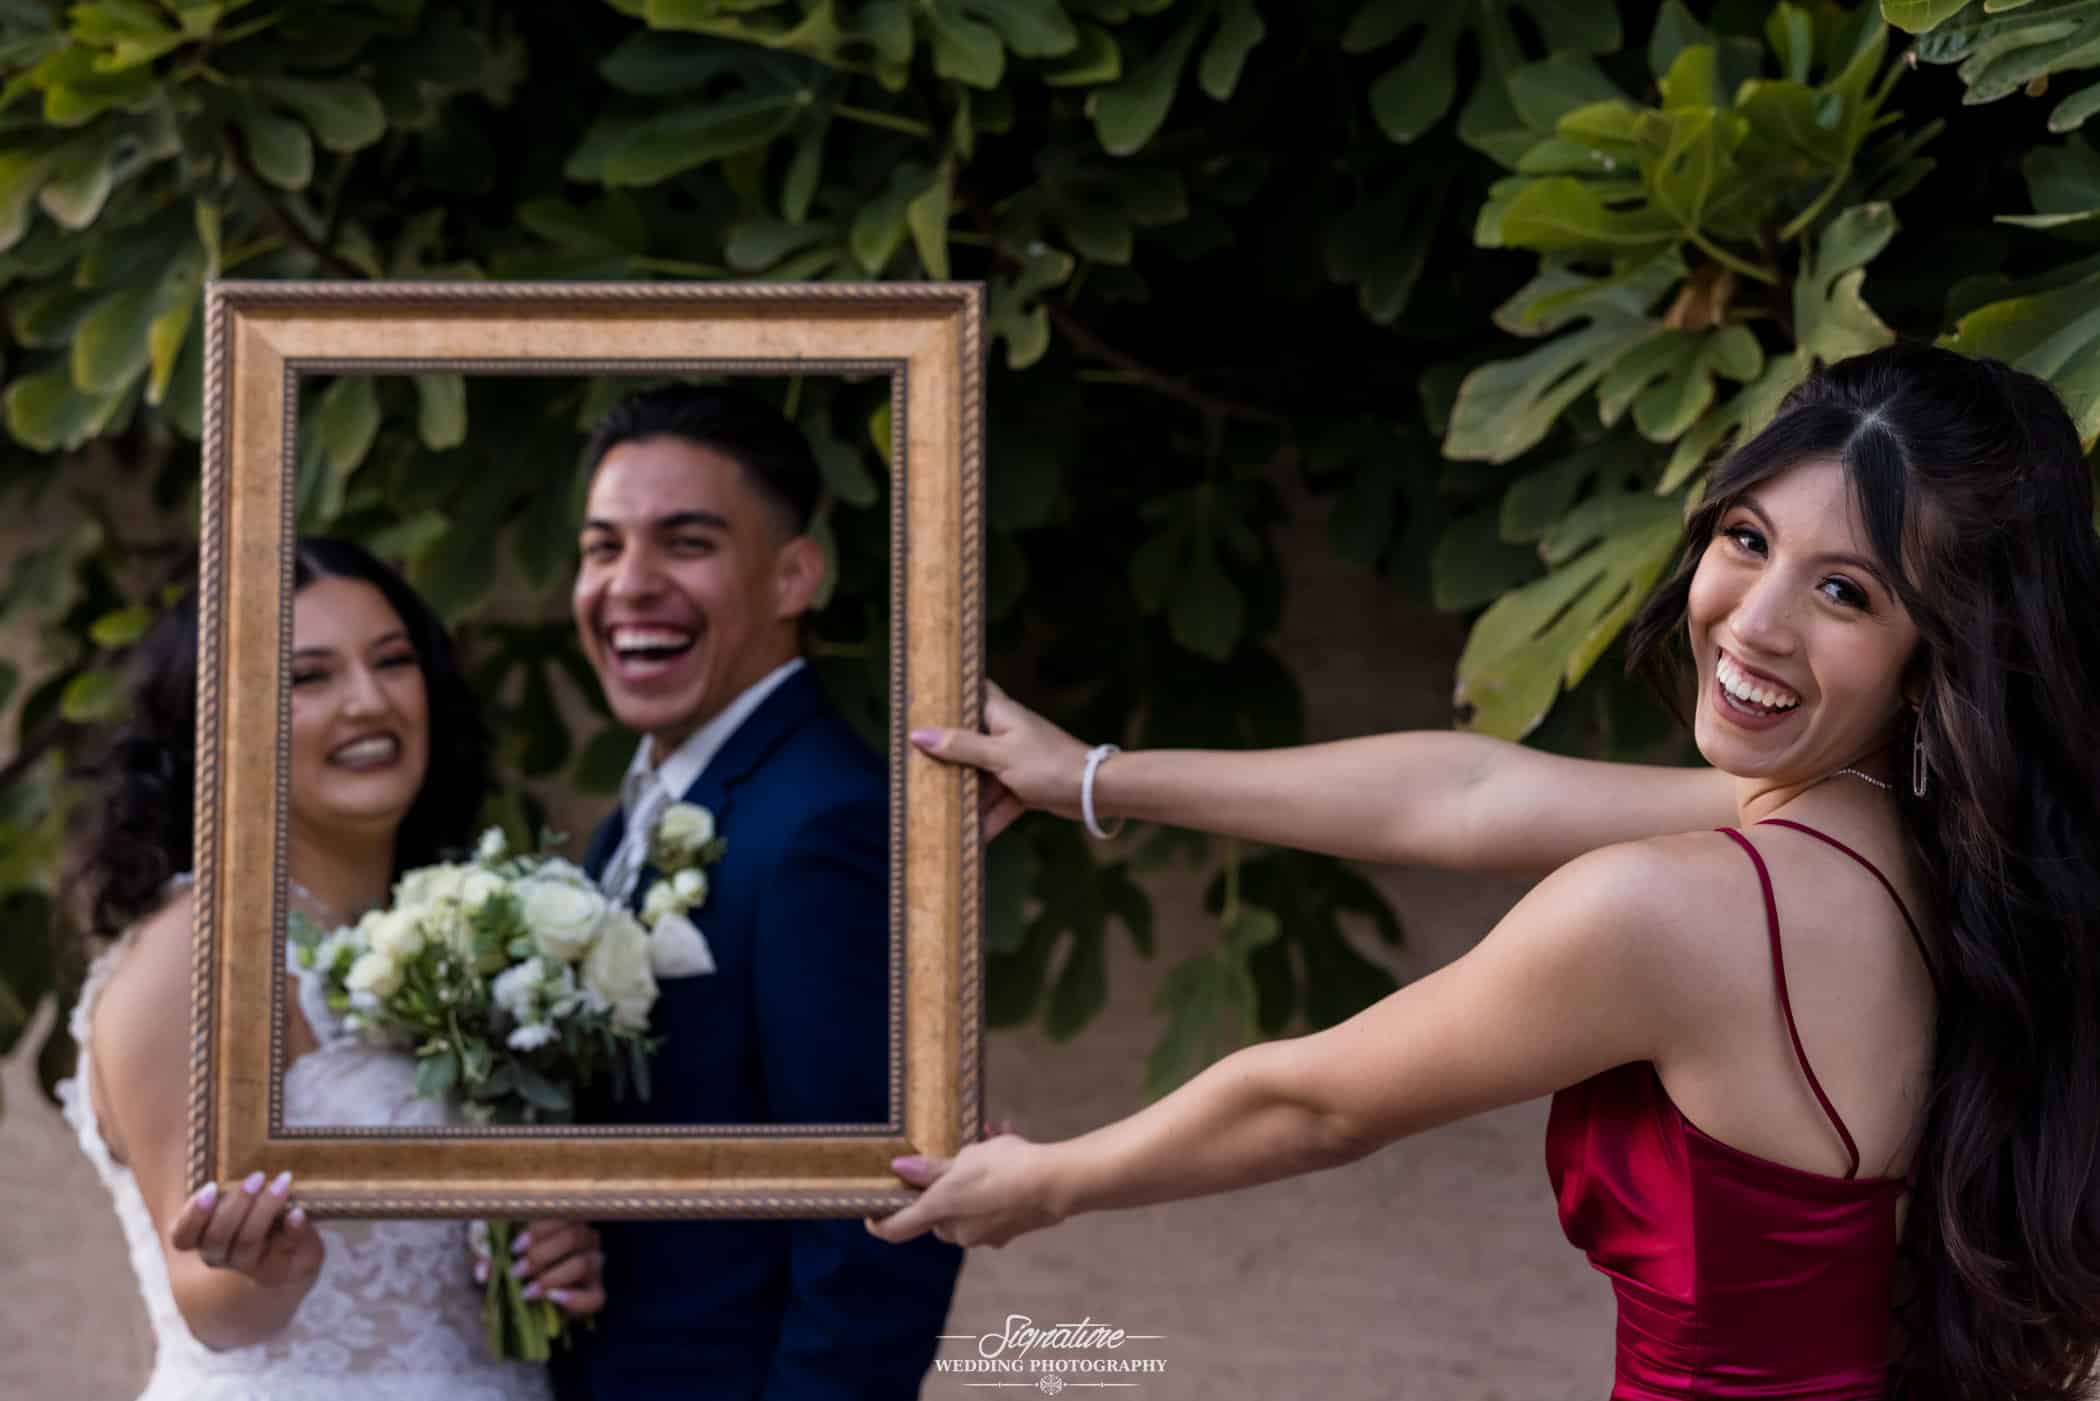 Bridesmaid holding frame around bride and groom